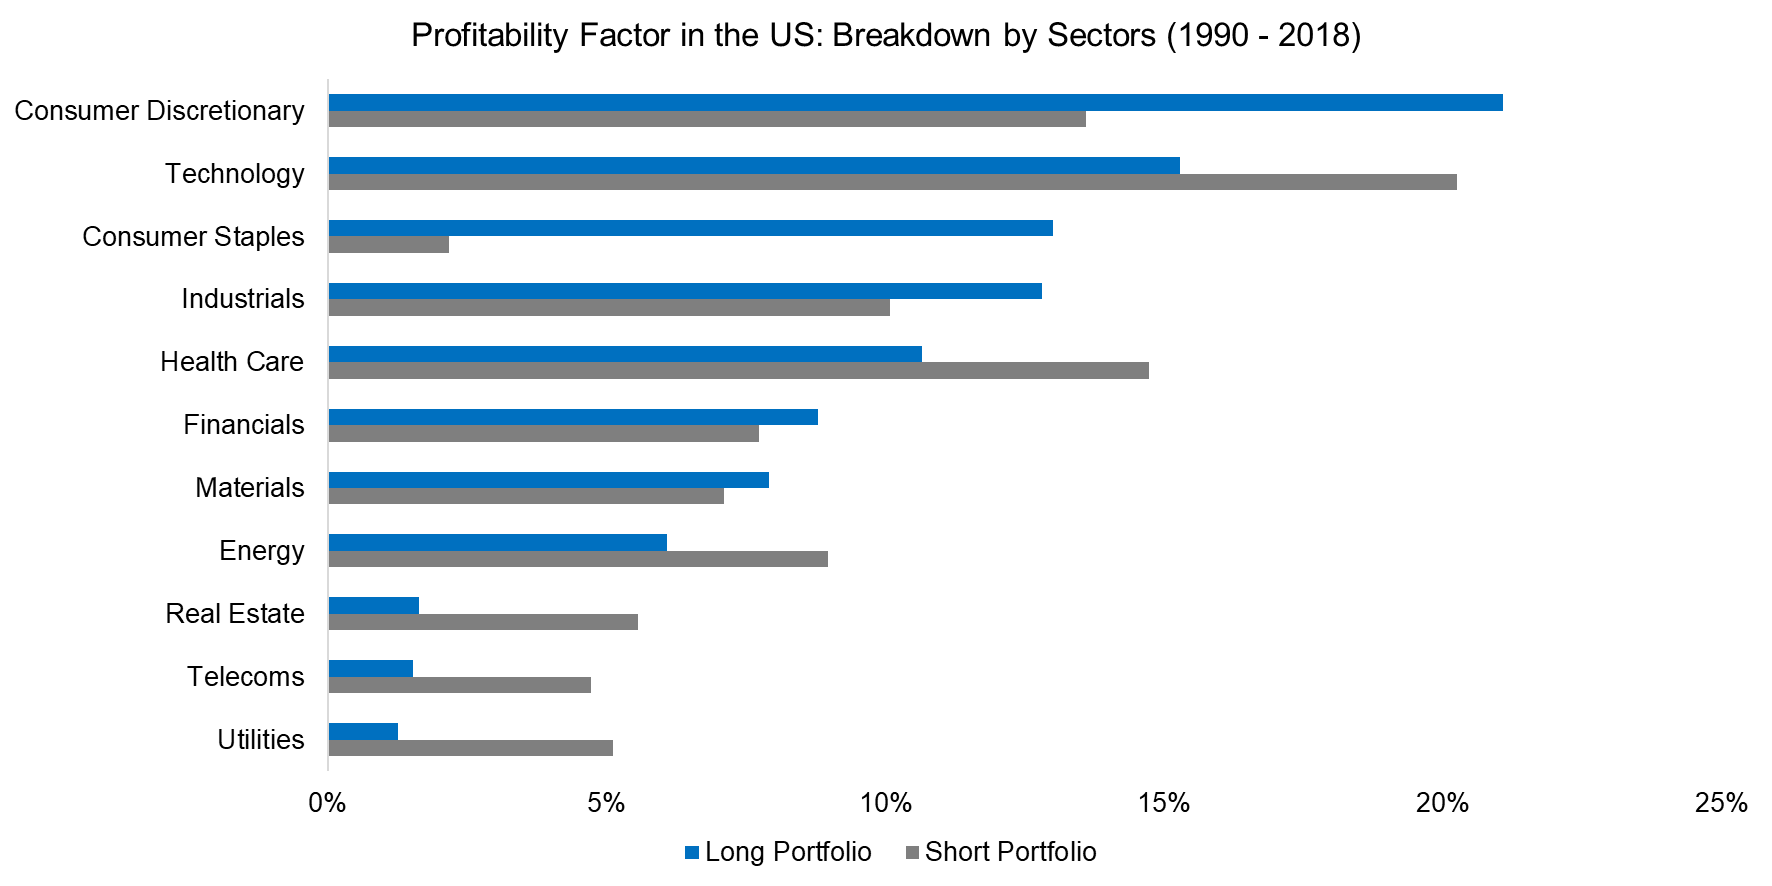 Profitability Factor in the US Breakdown by Sectors (1990 - 2018)